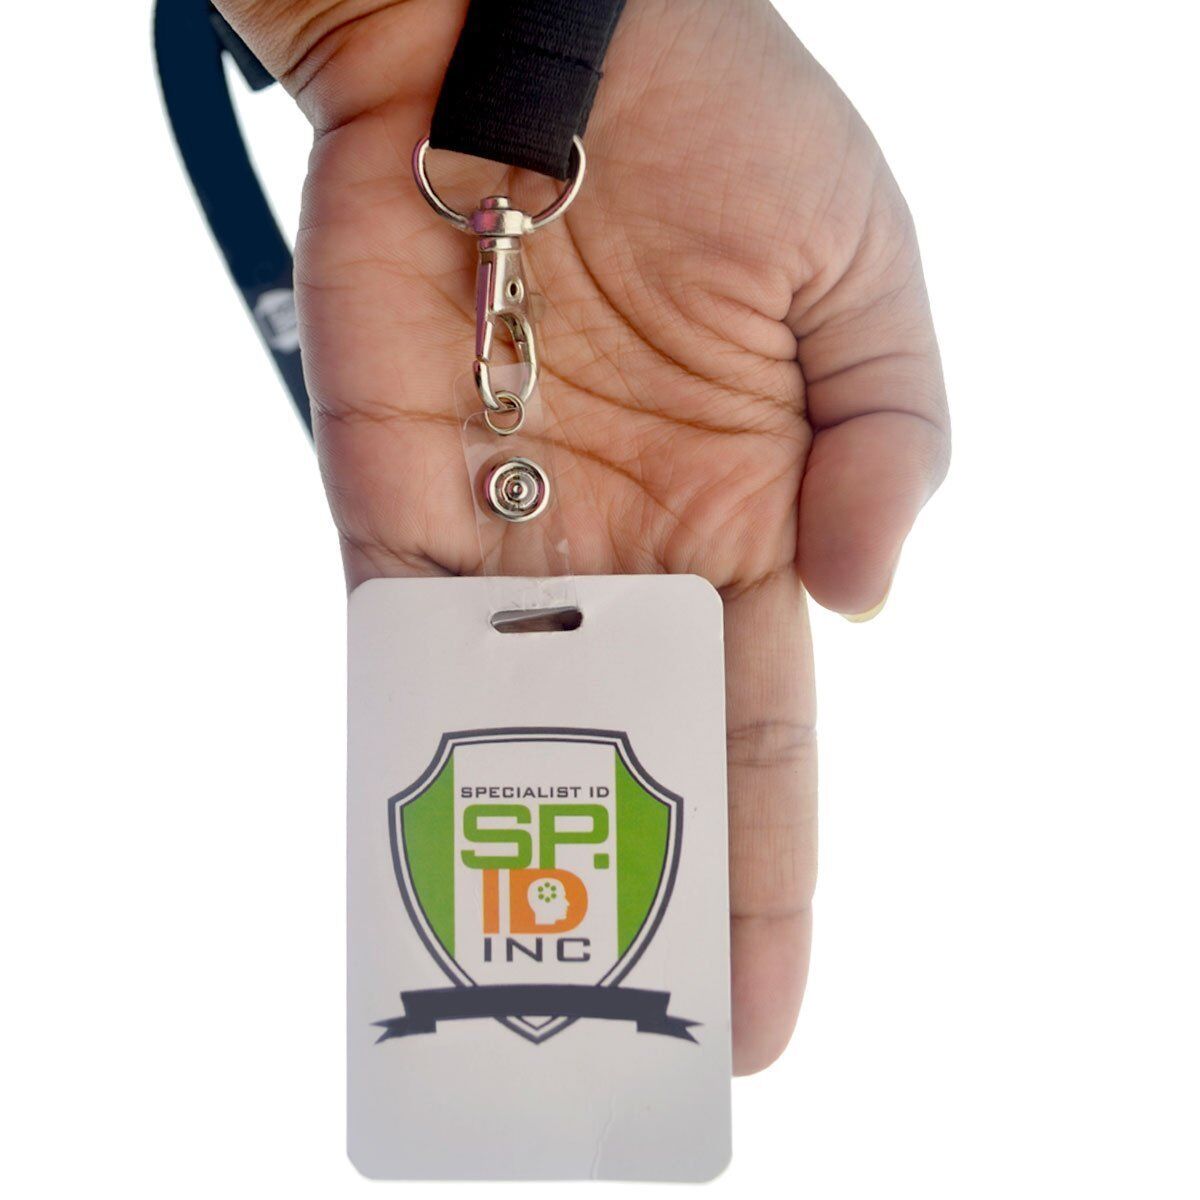 10 Clear Vinyl Plastic ID Badge Holder Straps w Snap & Eyelet Hole for Key Ring Specialist ID SPID-9280 - фотография #4